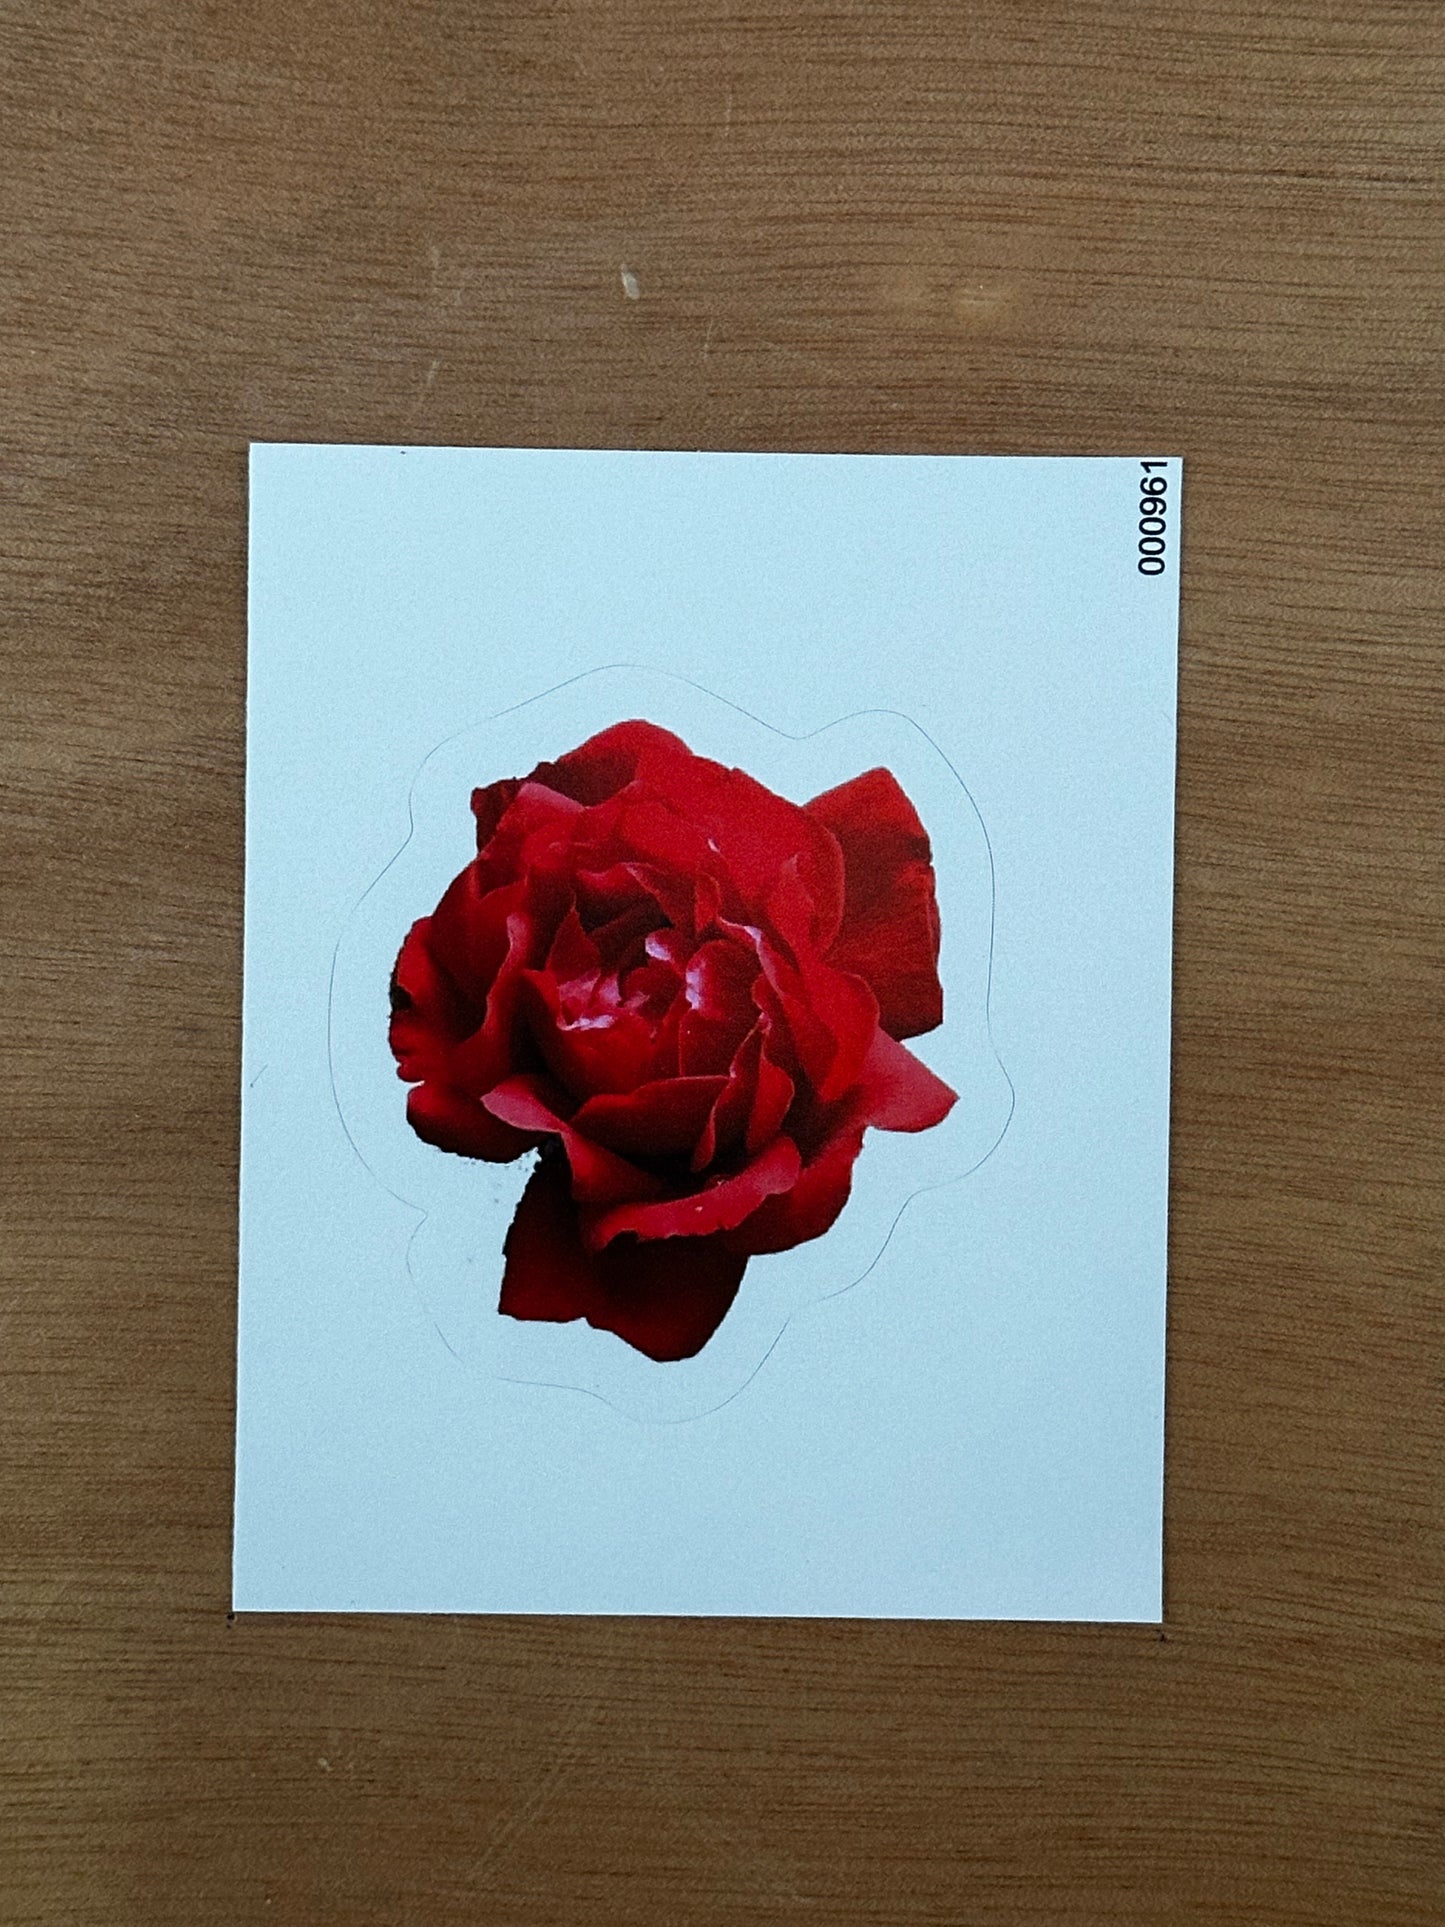 Red Rose Sticker